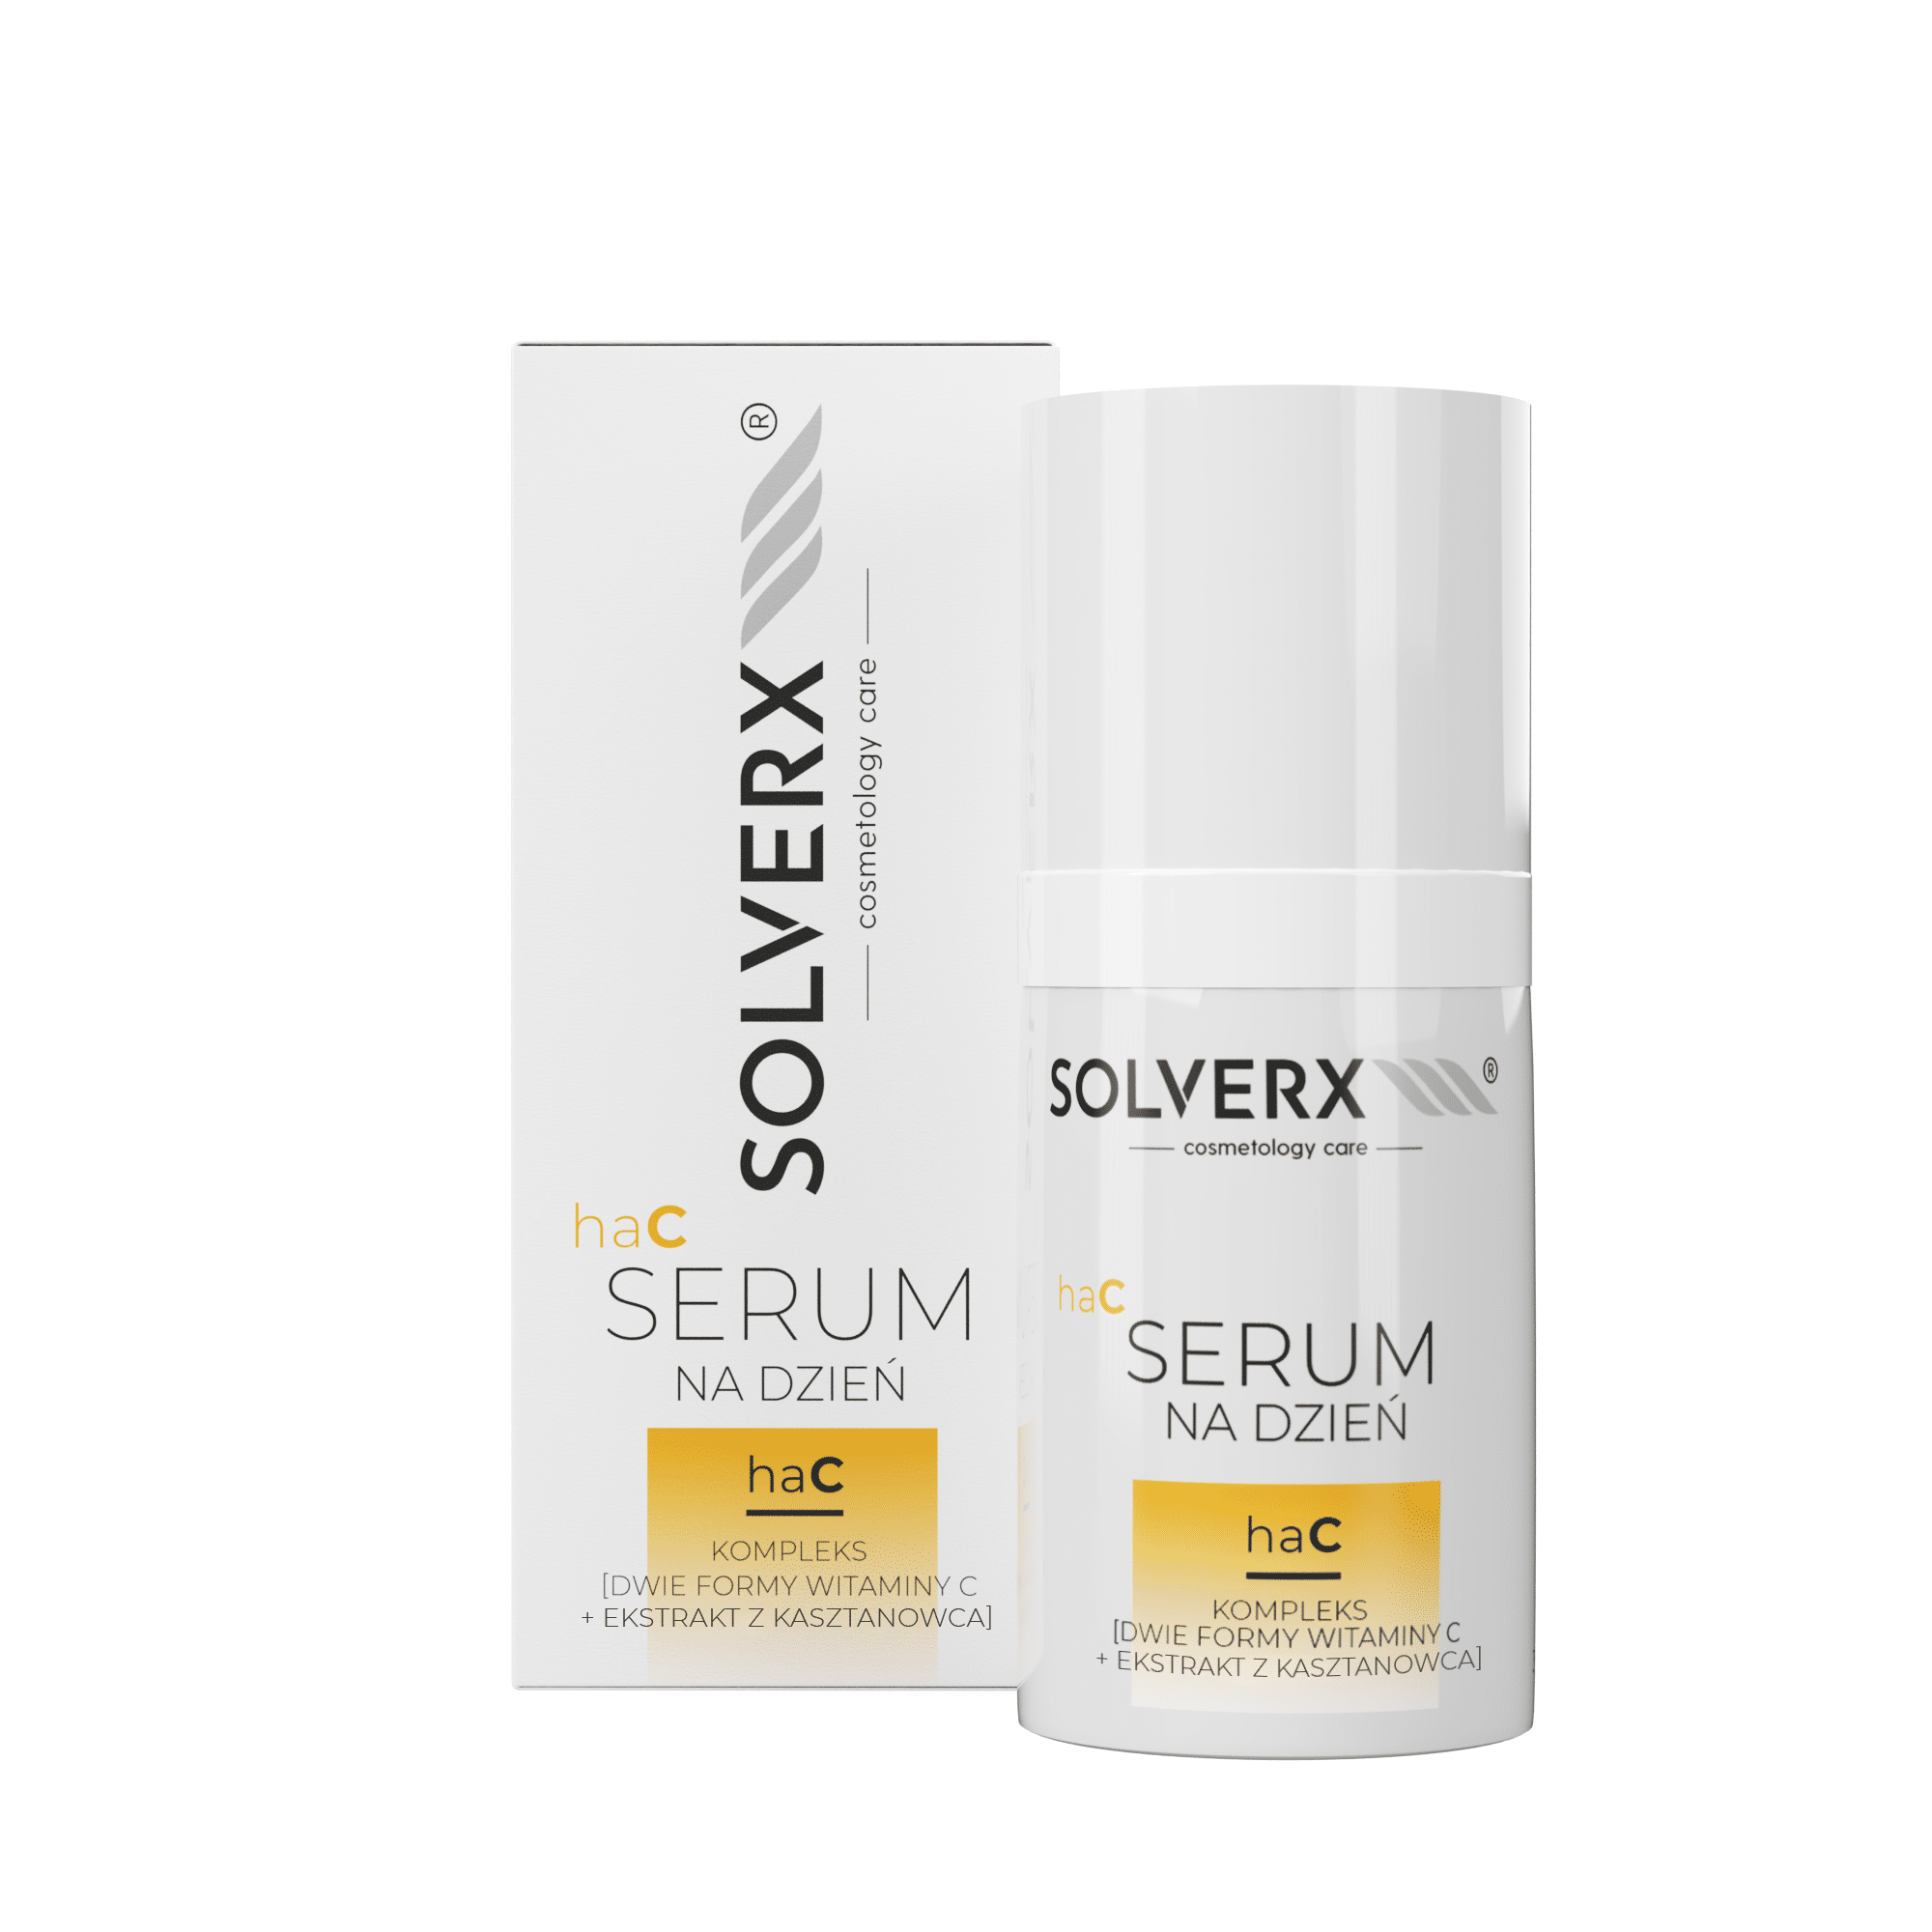 SOLVERX Cosmetology Care haC serum na